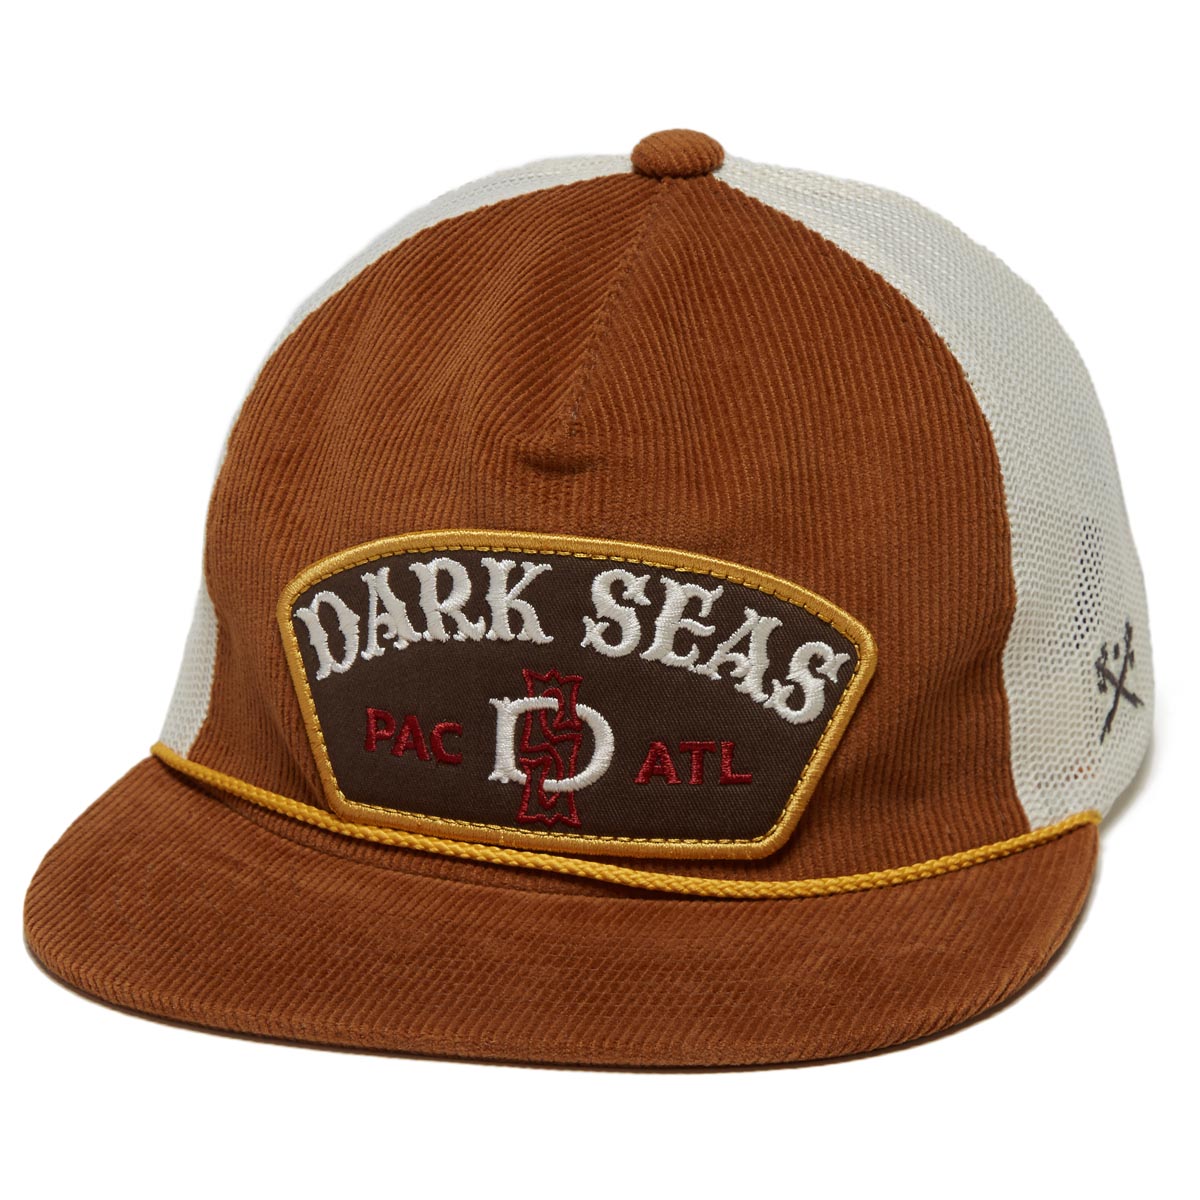 Dark Seas Lyon Hat - Brown/White image 1